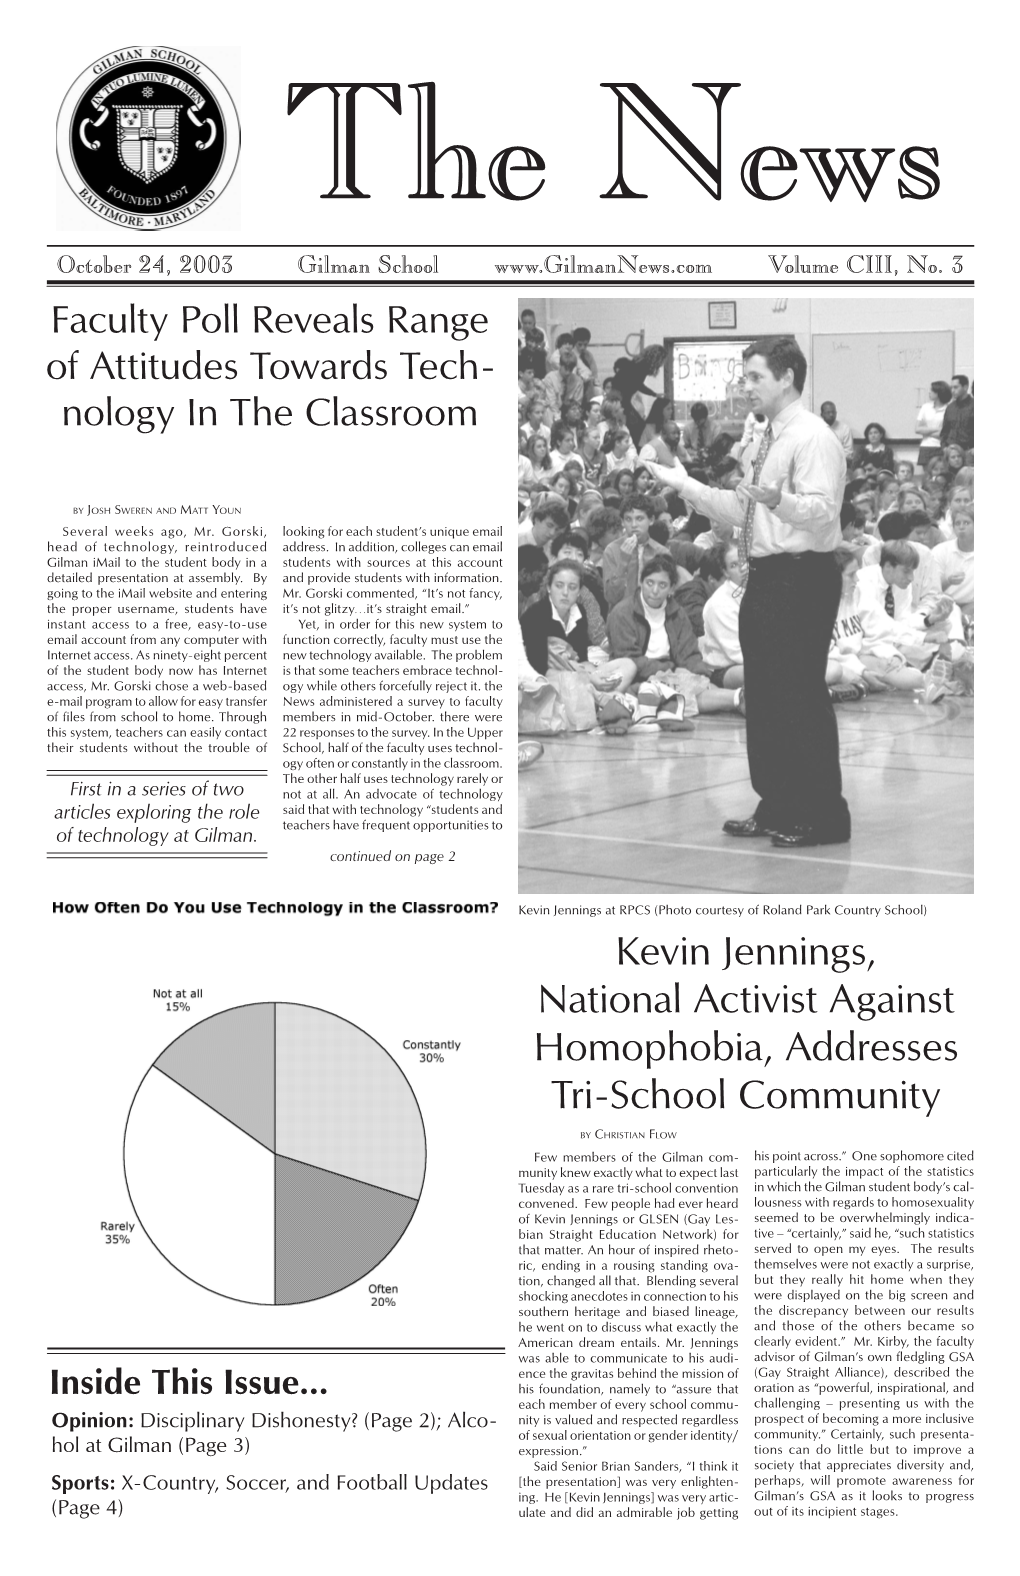 Kevin Jennings, National Activist Against Homophobia, Addresses Tri-School Community